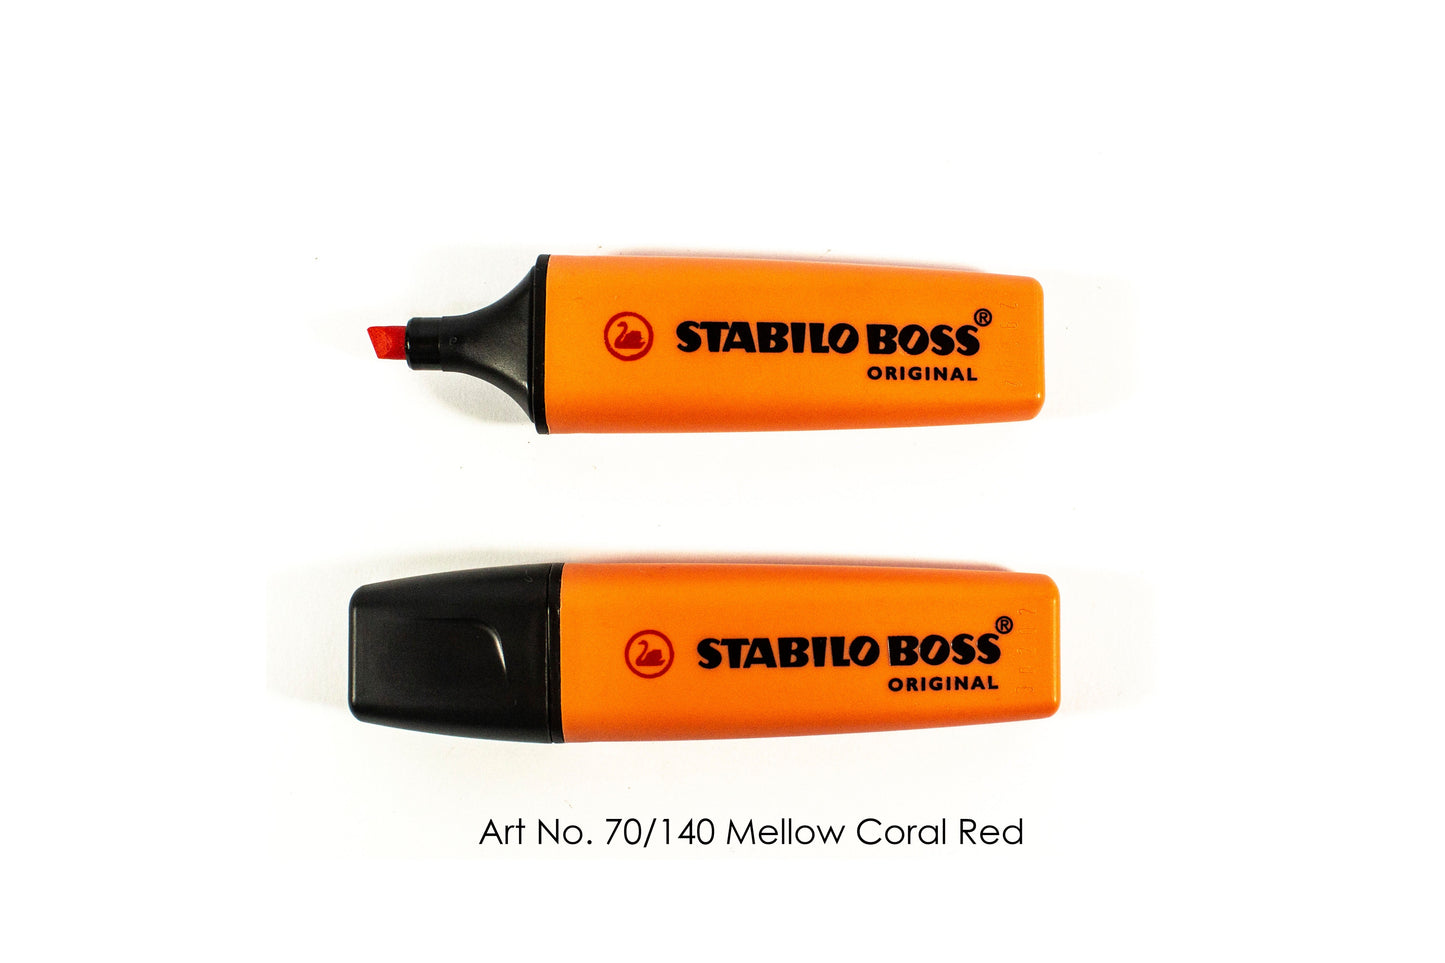 Stabilo Boss Original Pastel Highlighter | Sold by 10s